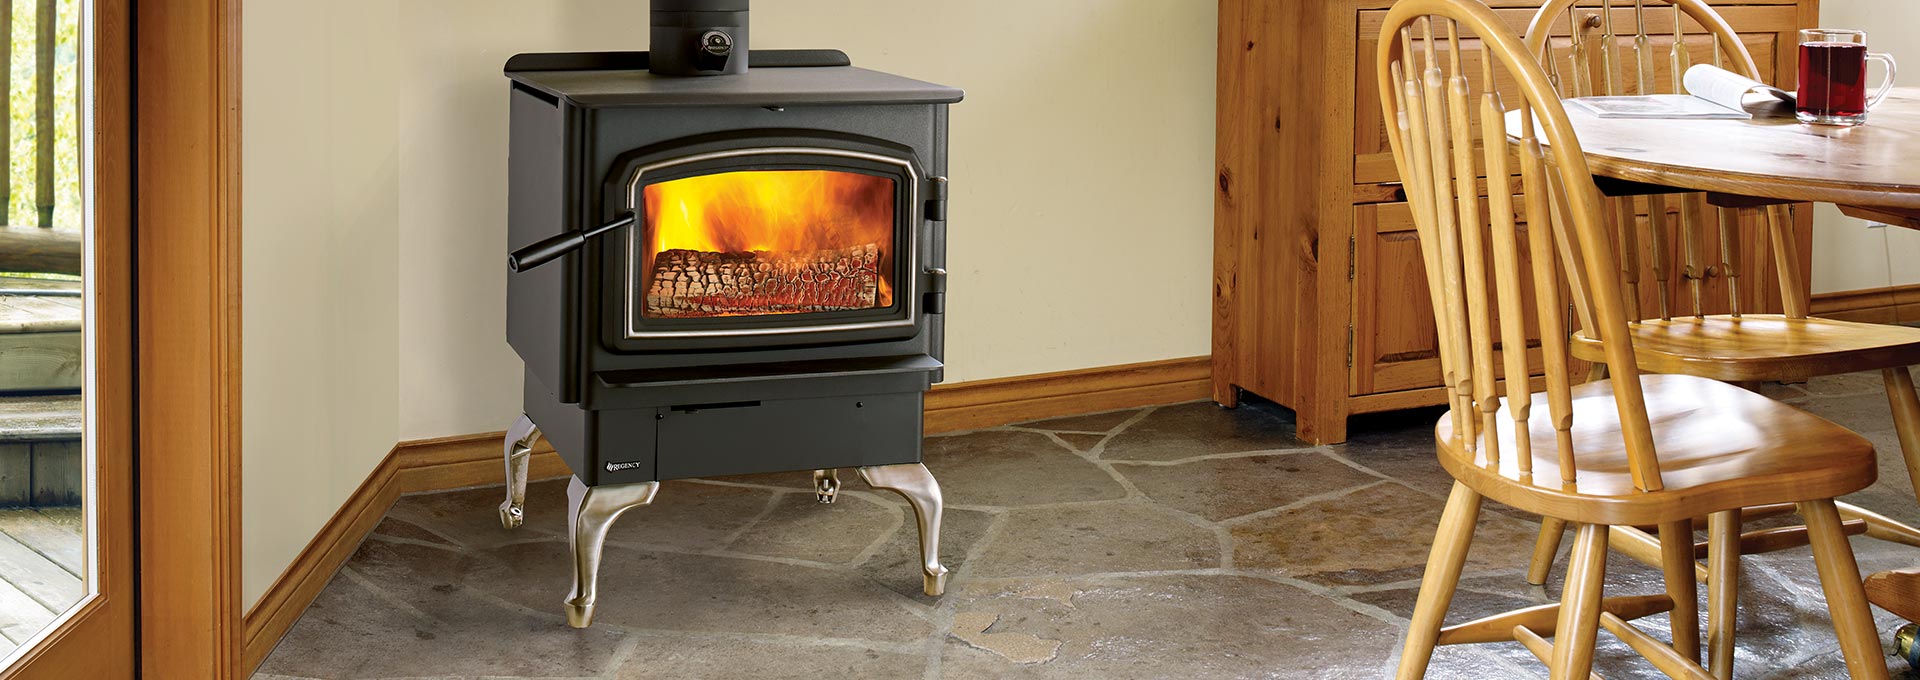 Regency Fireplace Insert Prices Elegant Wood Stoves